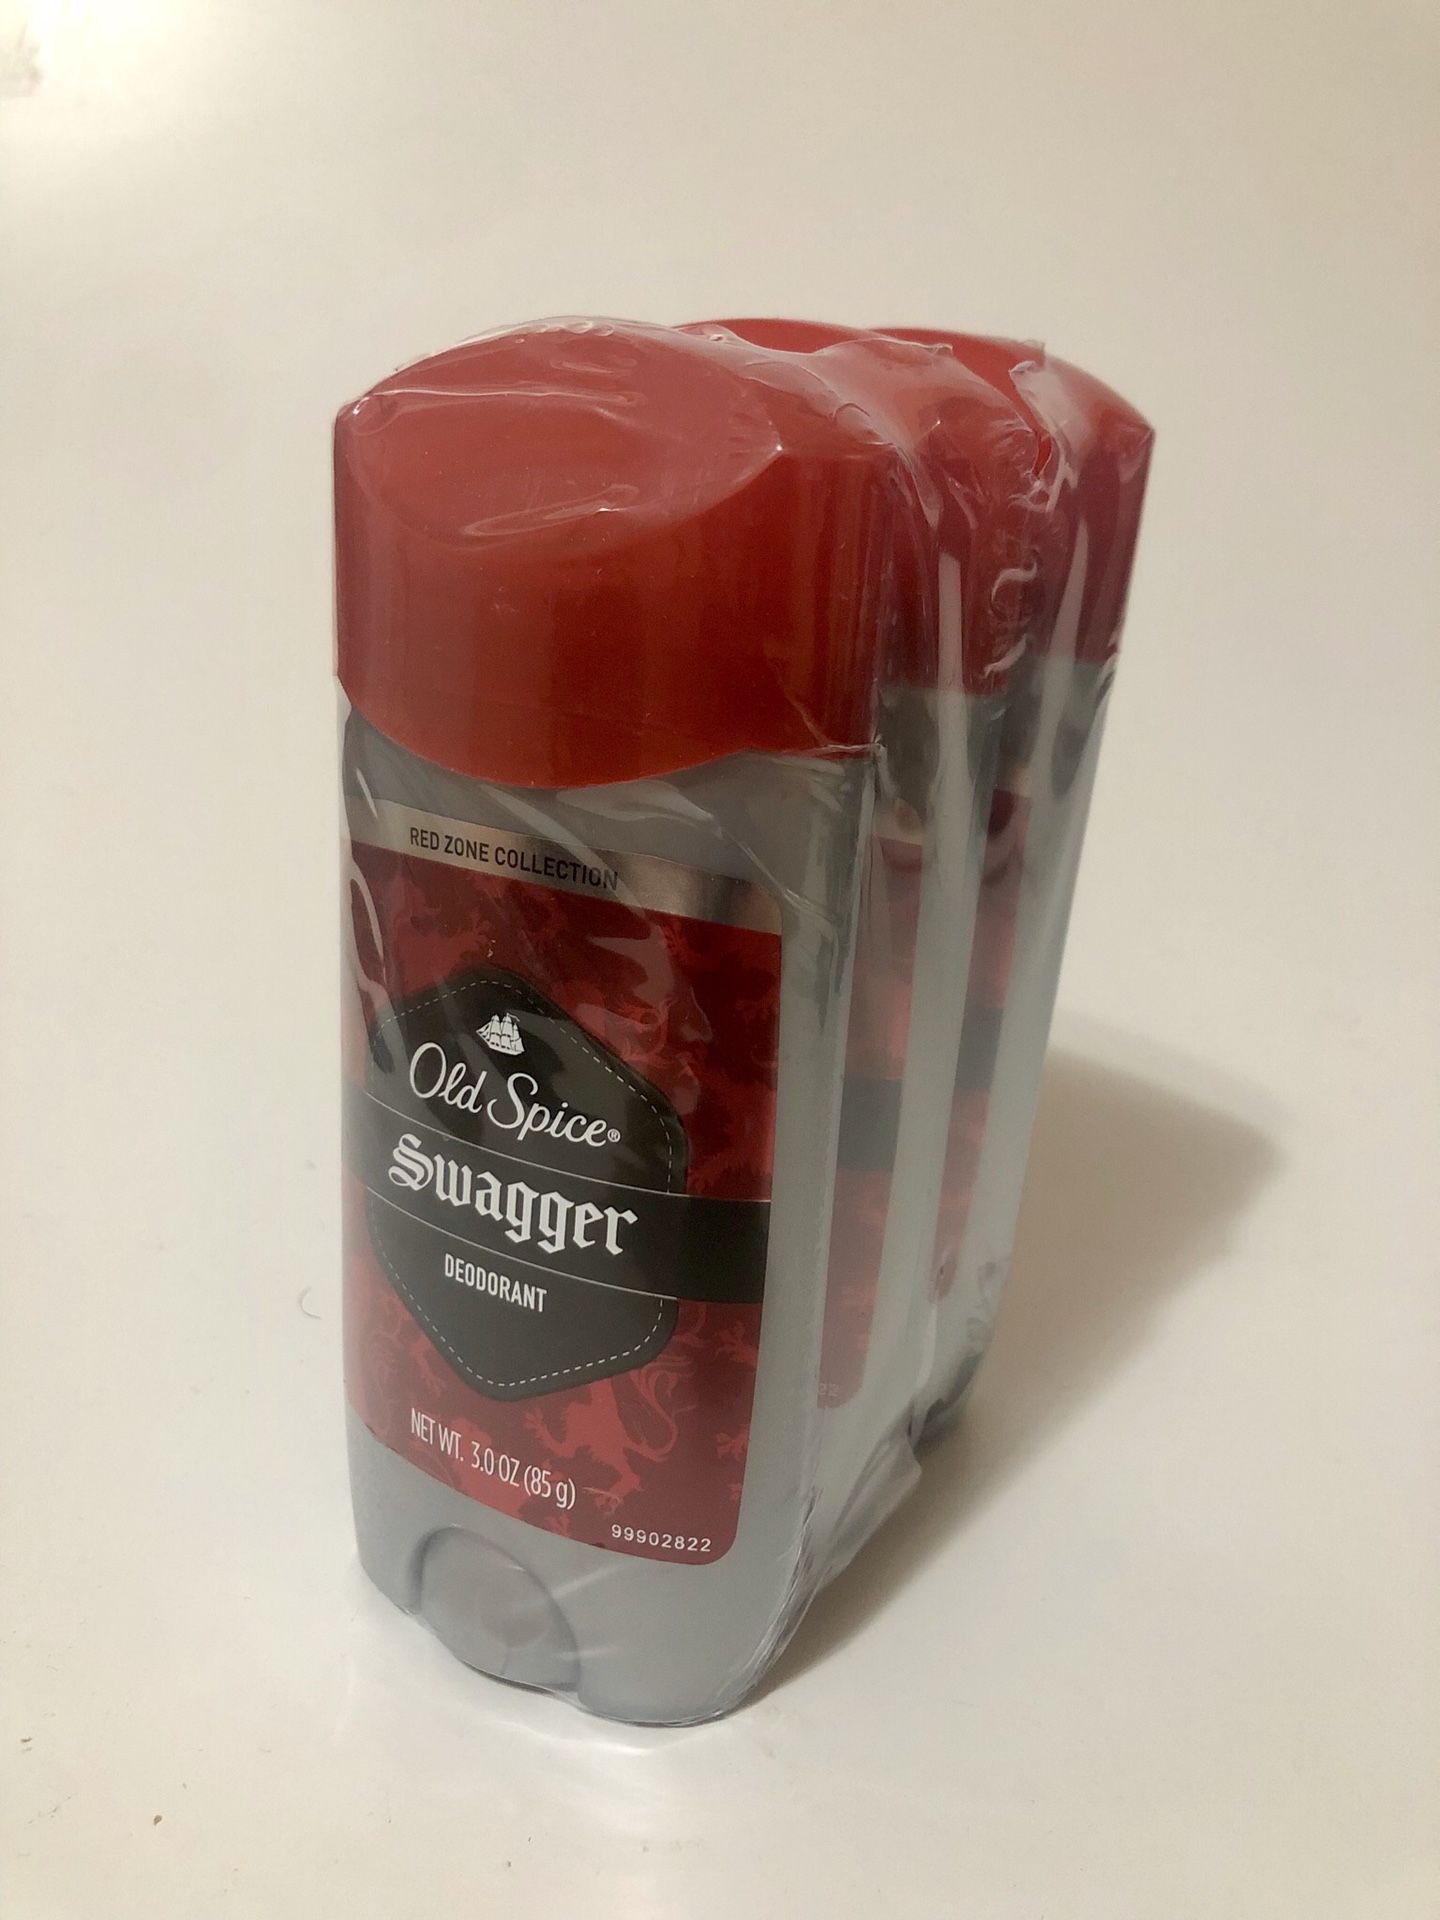 Old Spice Swagger Deodorant 3pk (3oz) - $12